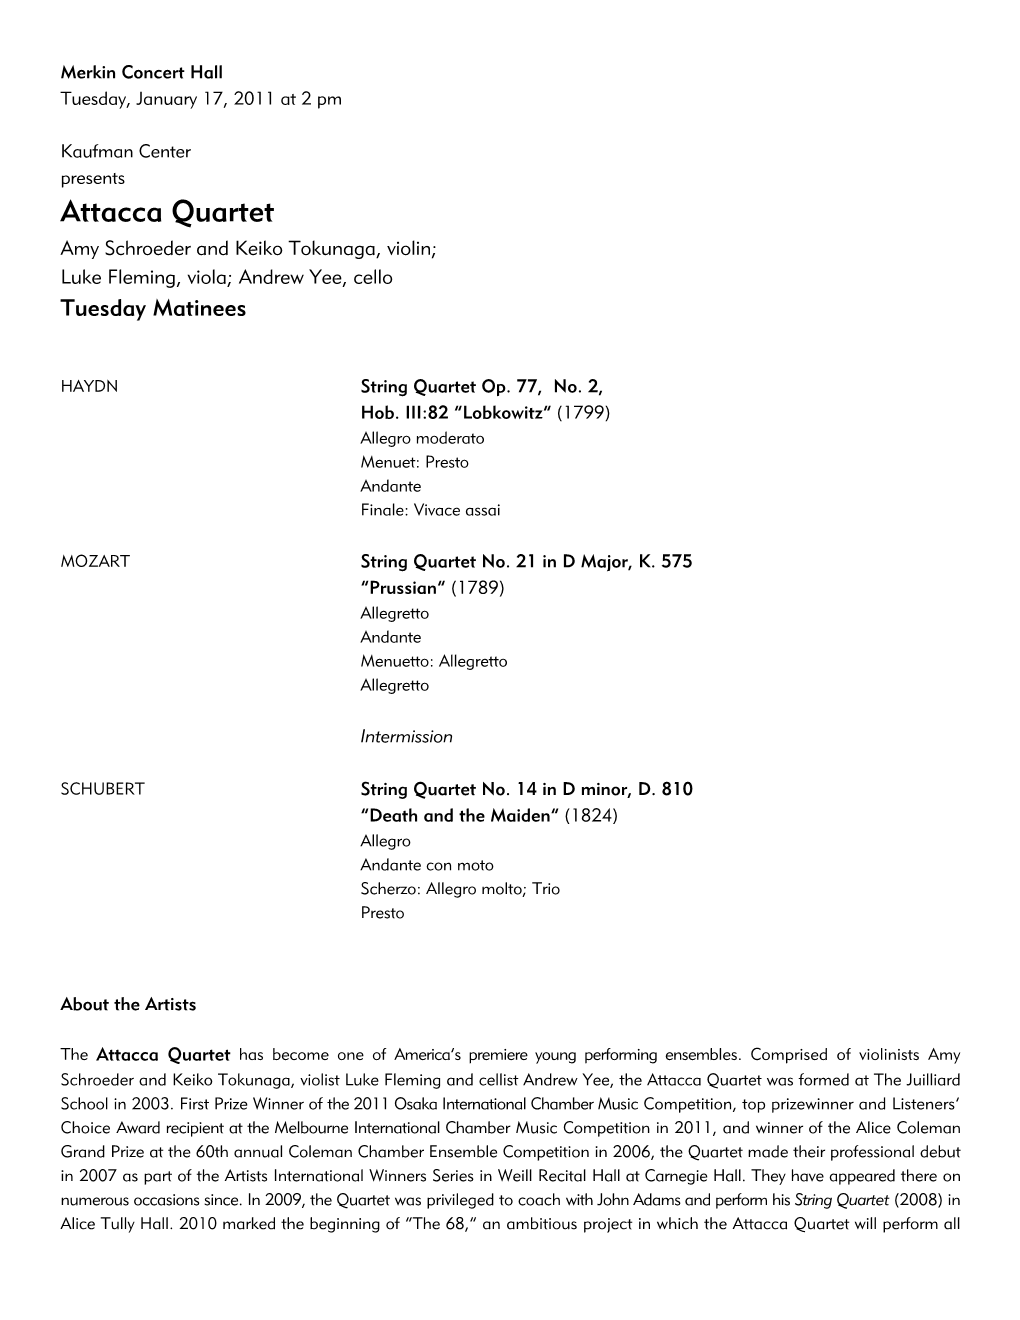 Attacca Quartet Amy Schroeder and Keiko Tokunaga, Violin; Luke Fleming, Viola; Andrew Yee, Cello Tuesday Matinees